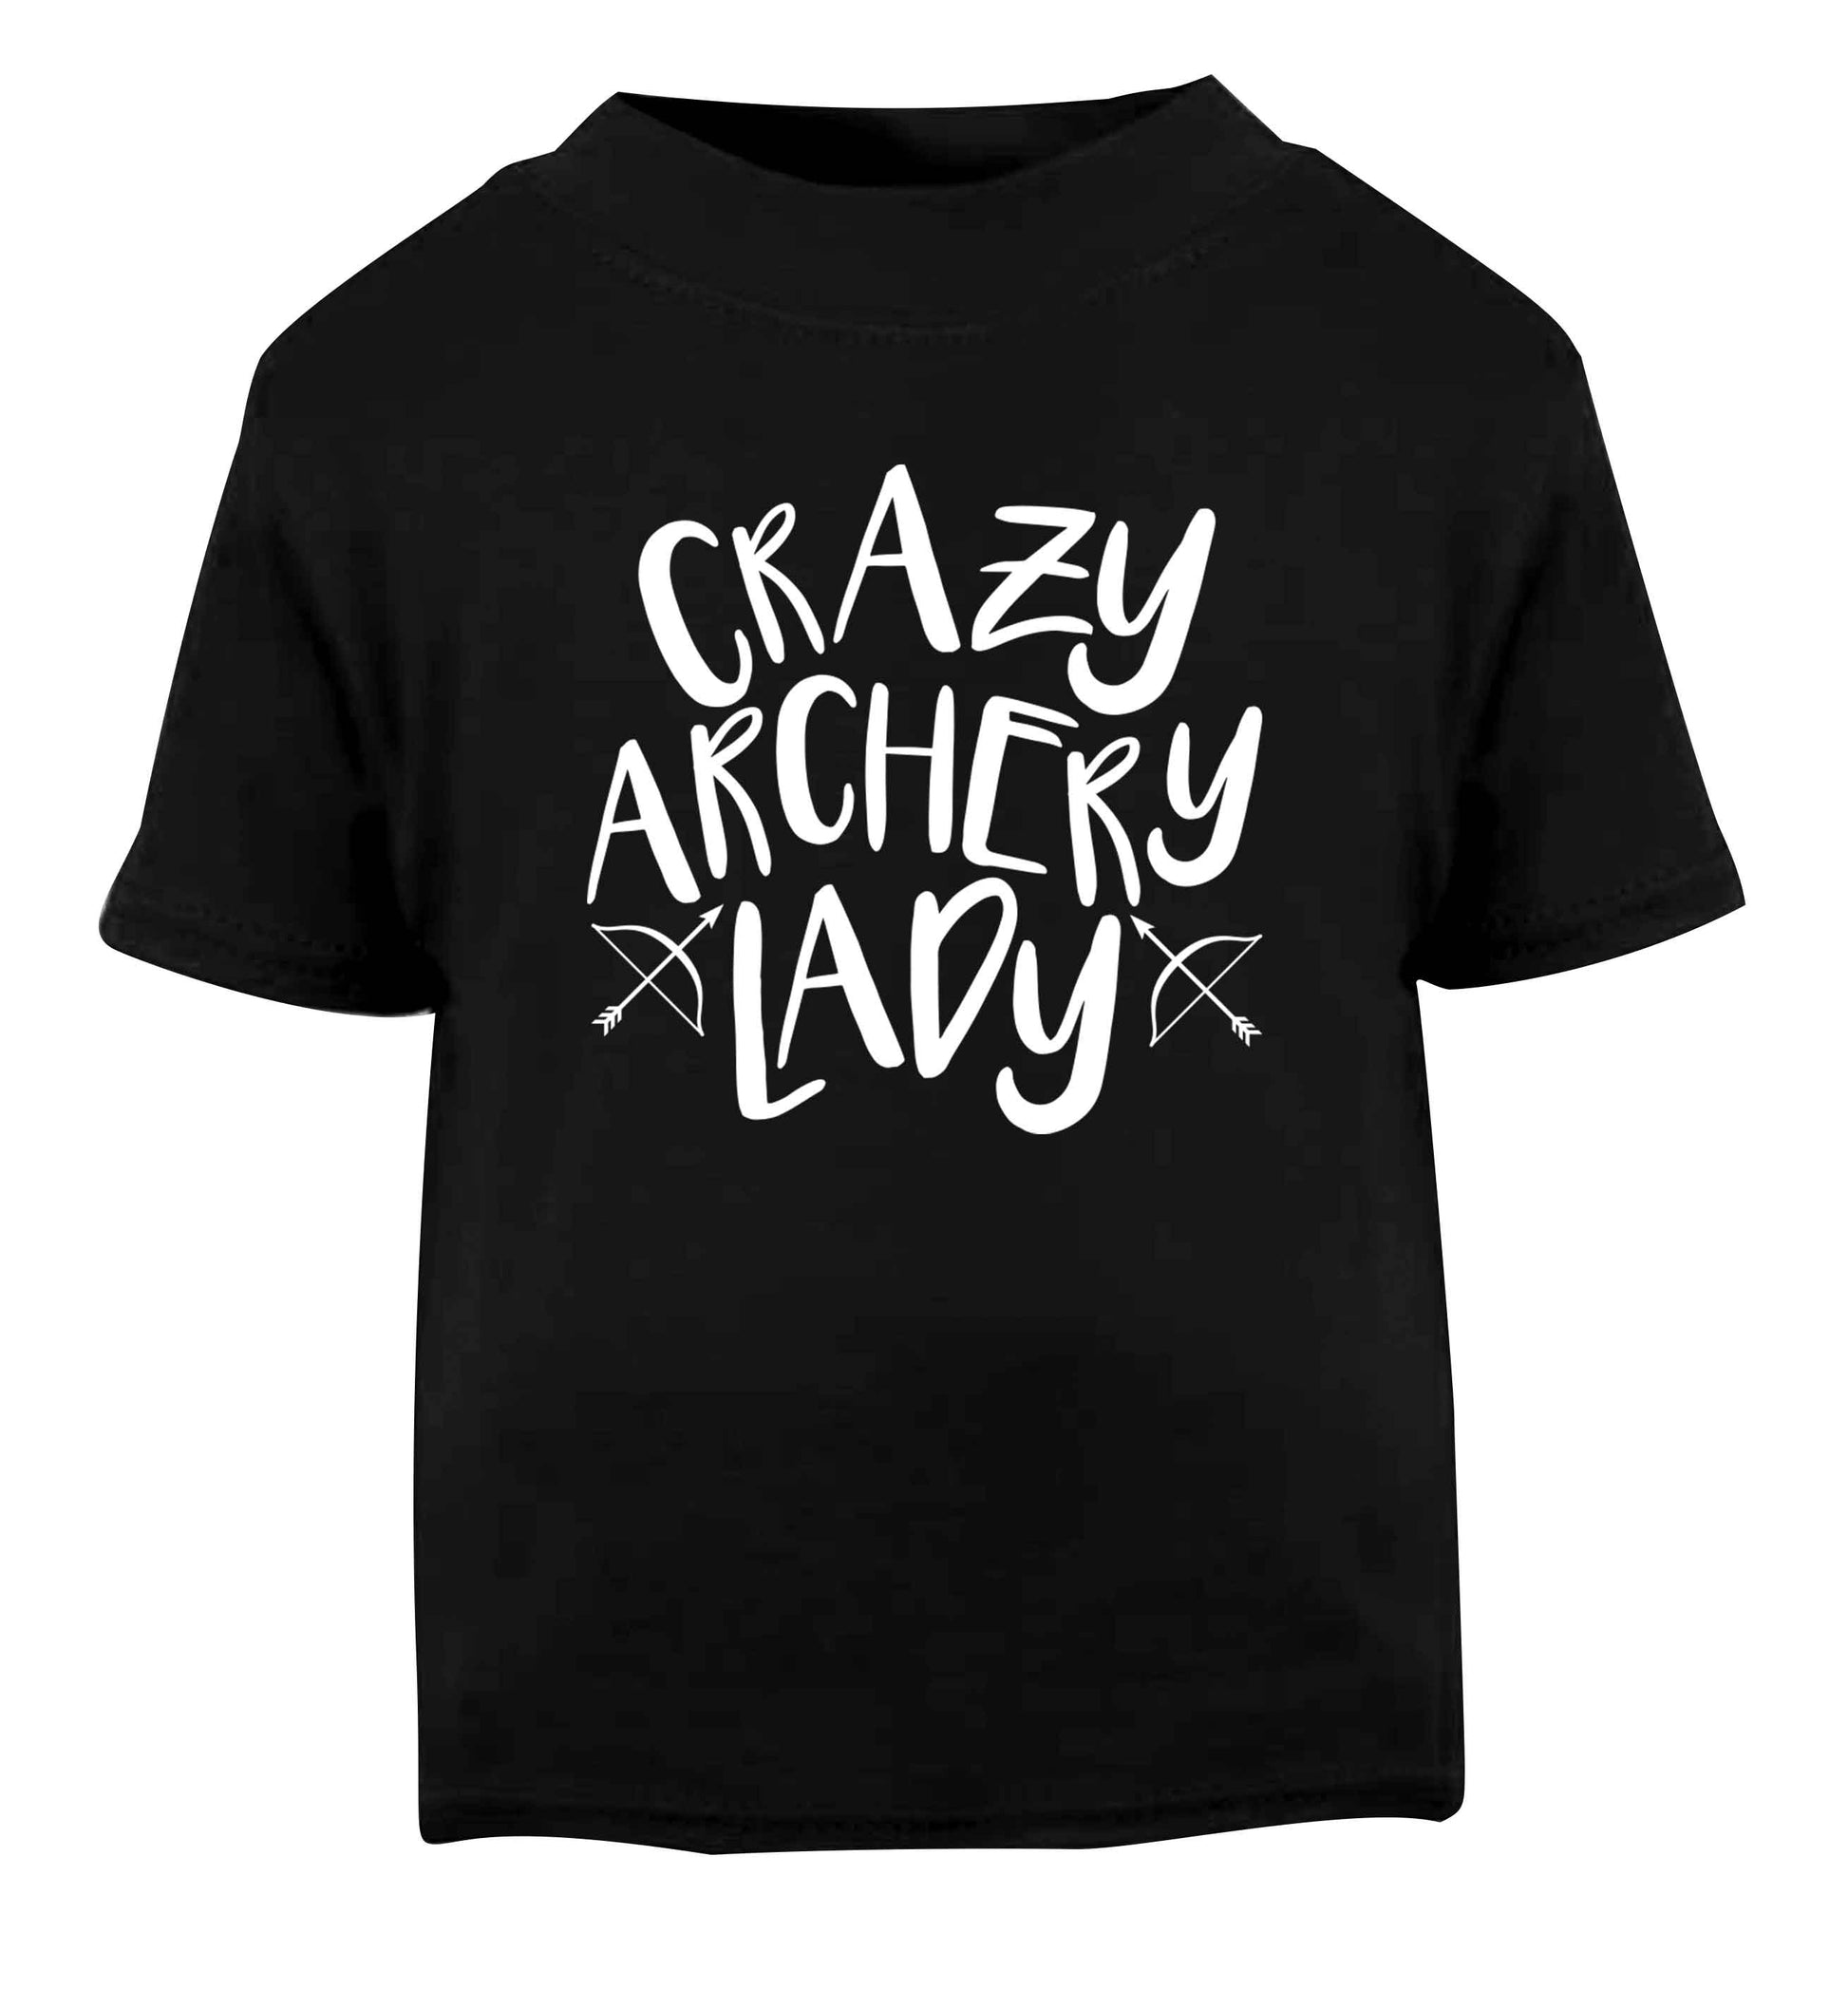 Crazy archery lady Black Baby Toddler Tshirt 2 years